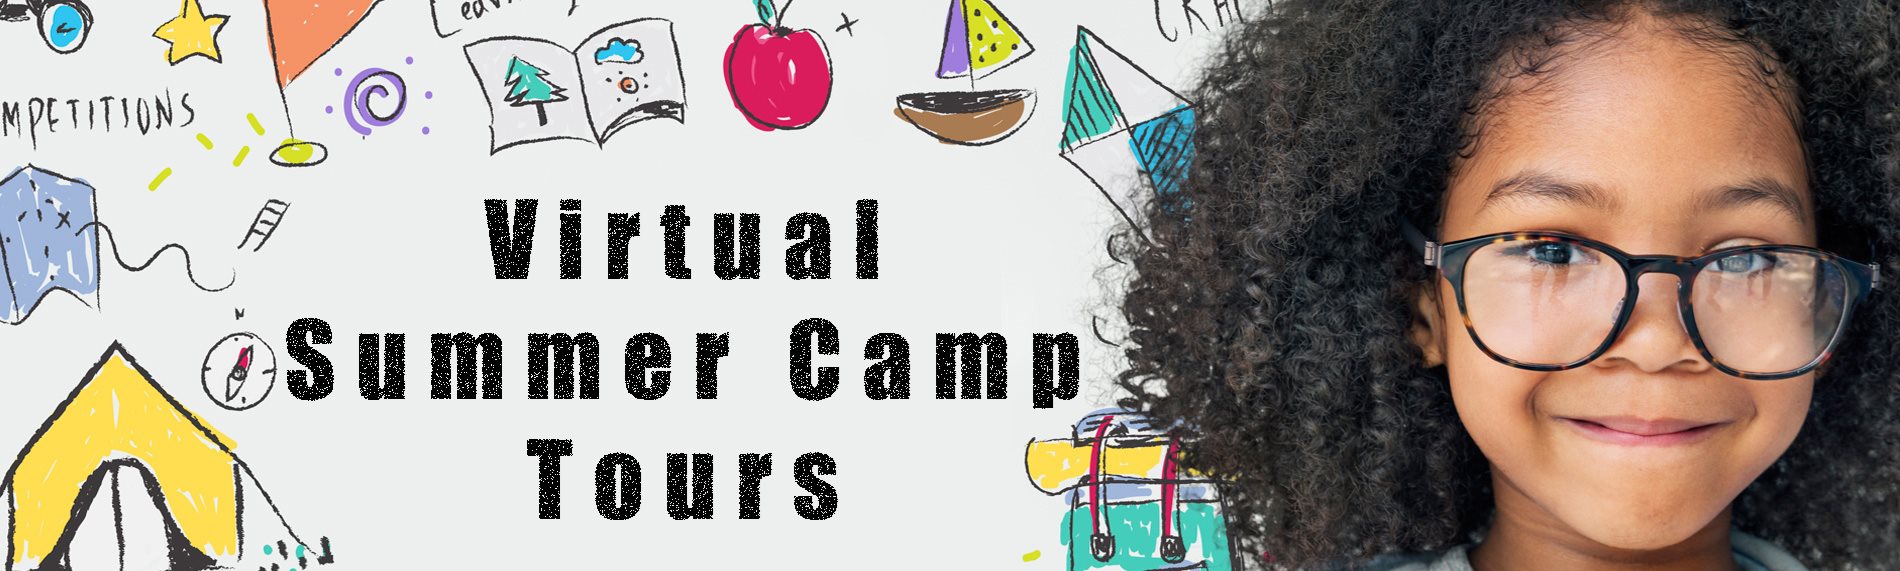 NJ Kids Virtual Summer Camps